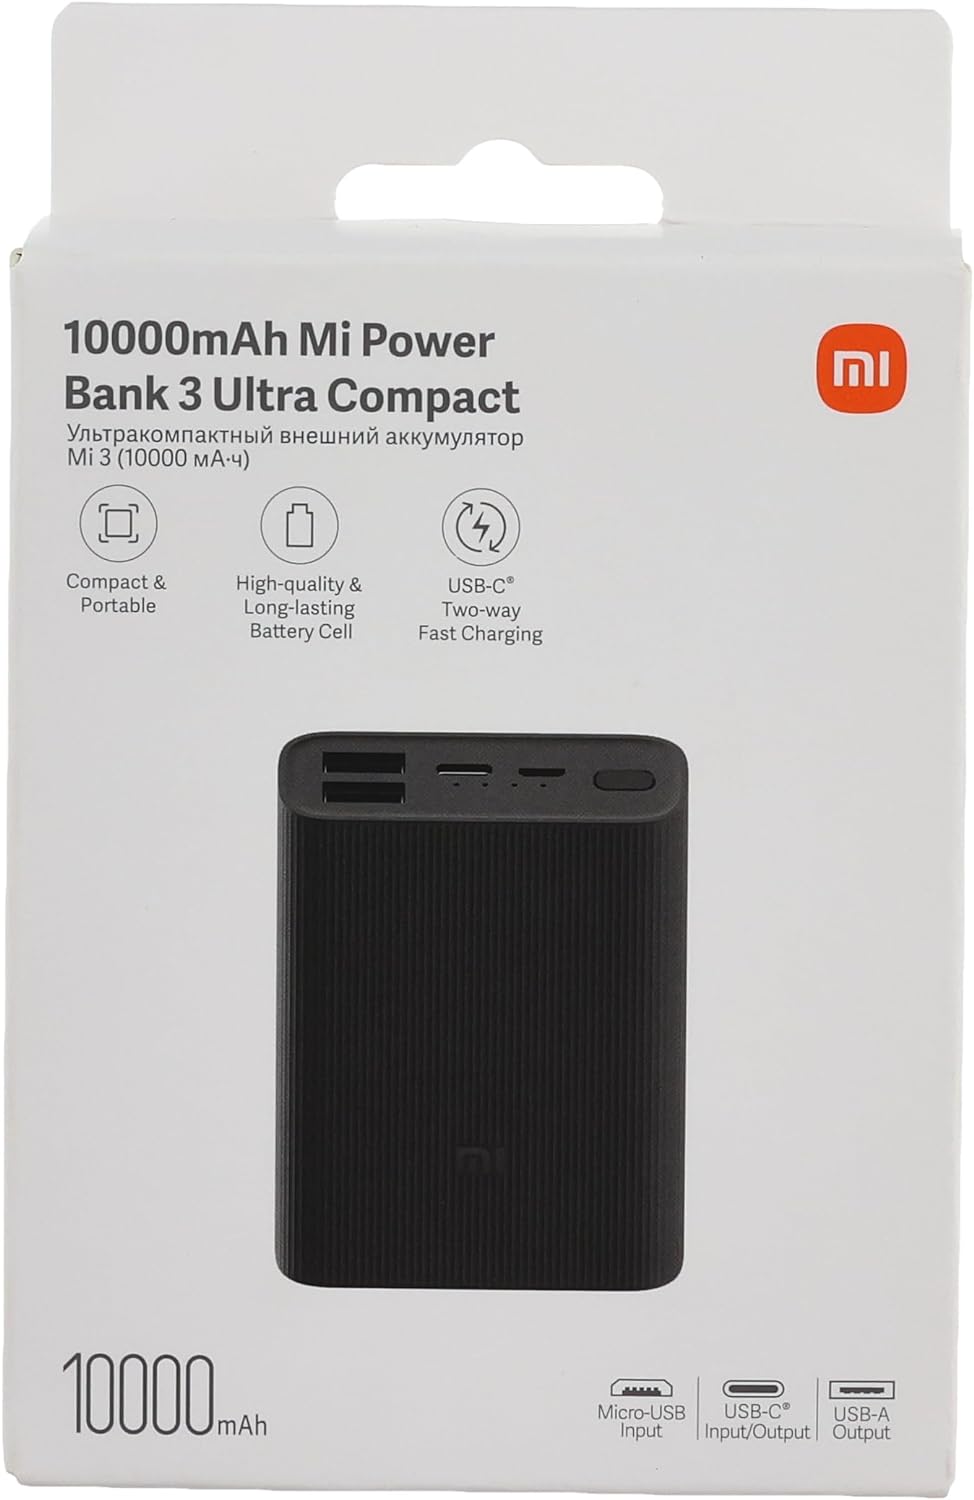 Mi Power Bank 3 Ultra Compact 10000 mAh - Local Warranty 12 Months